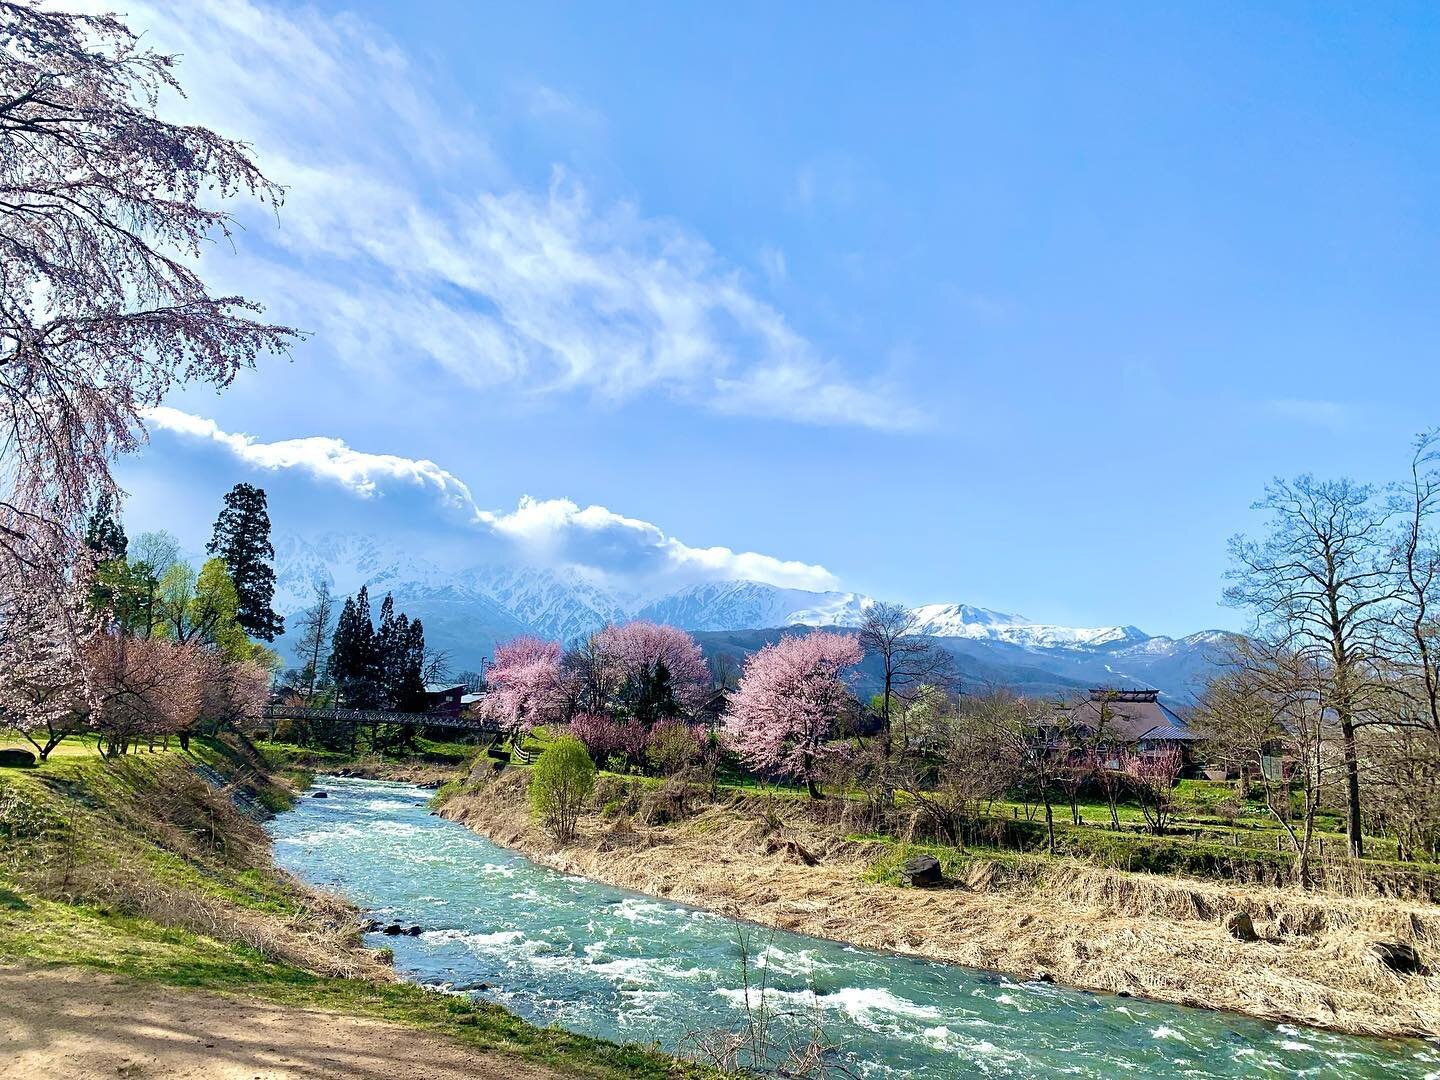 Cherry blossoms go by in the blink of an eye 😲🌸
.
#cherryblossom #hakuba #hakubavalley #instatravel #japanholiday #springskiing #skijapanholidays #tourismjapan #explorejapan #traveljapan #hakubalife